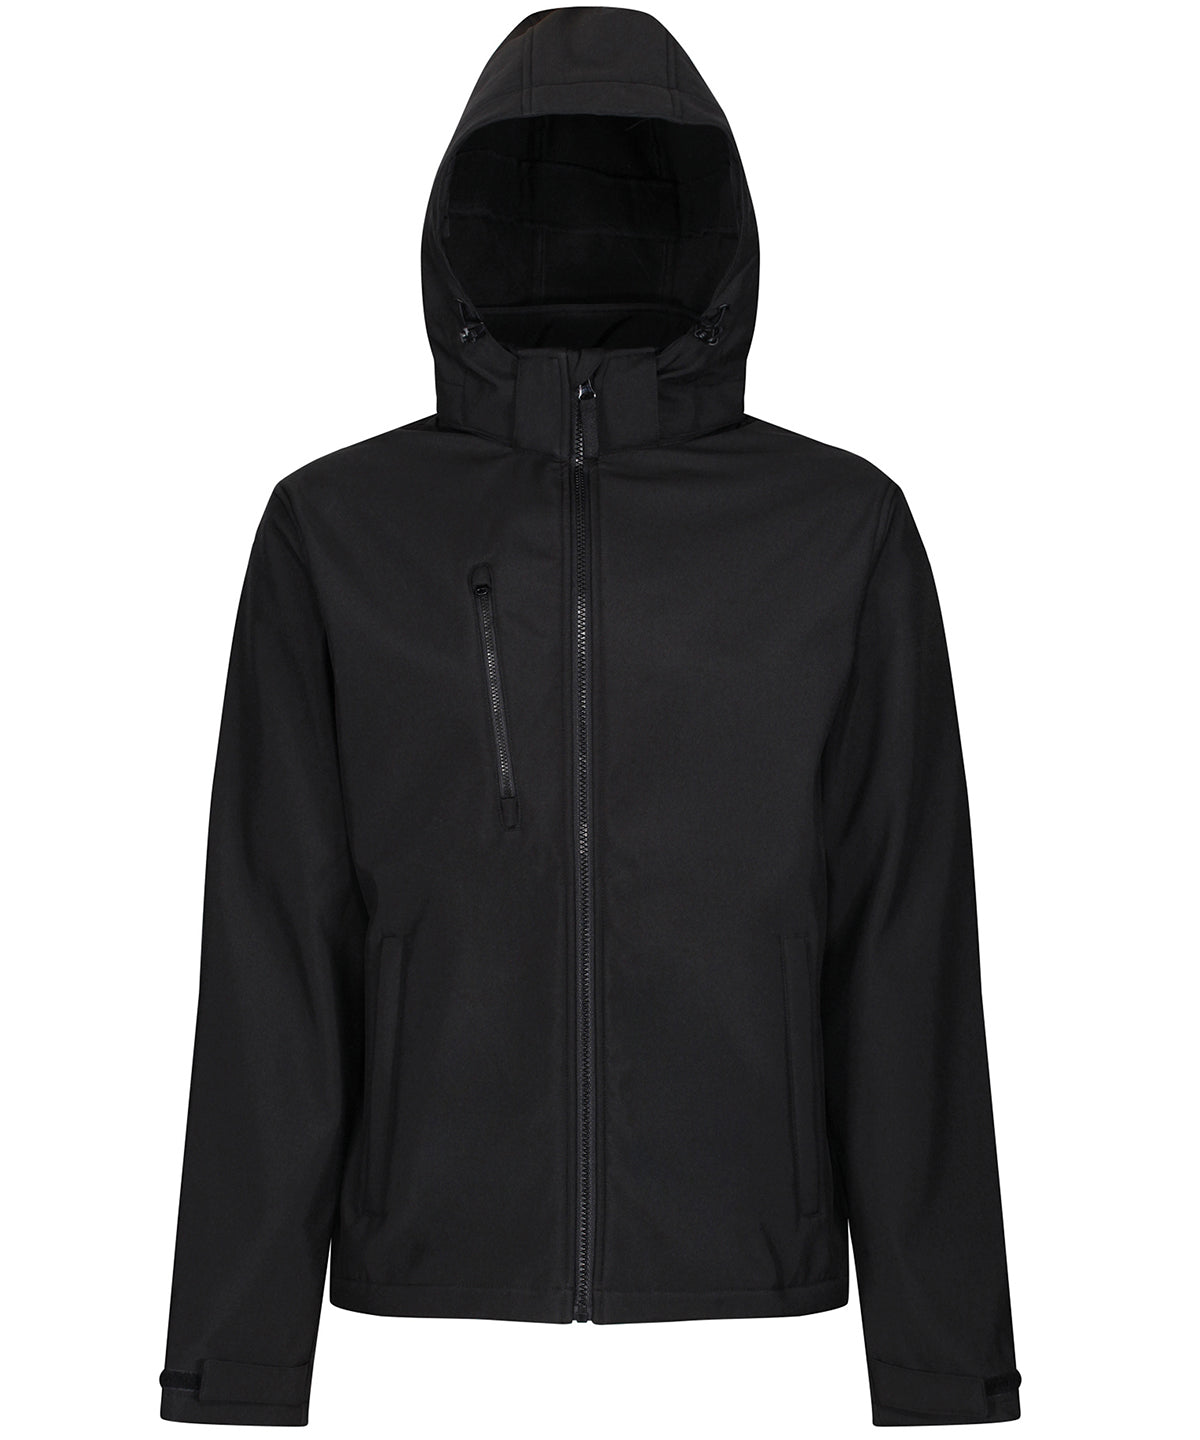 Jakkar - Venturer 3-layer Hooded Softshell Jacket